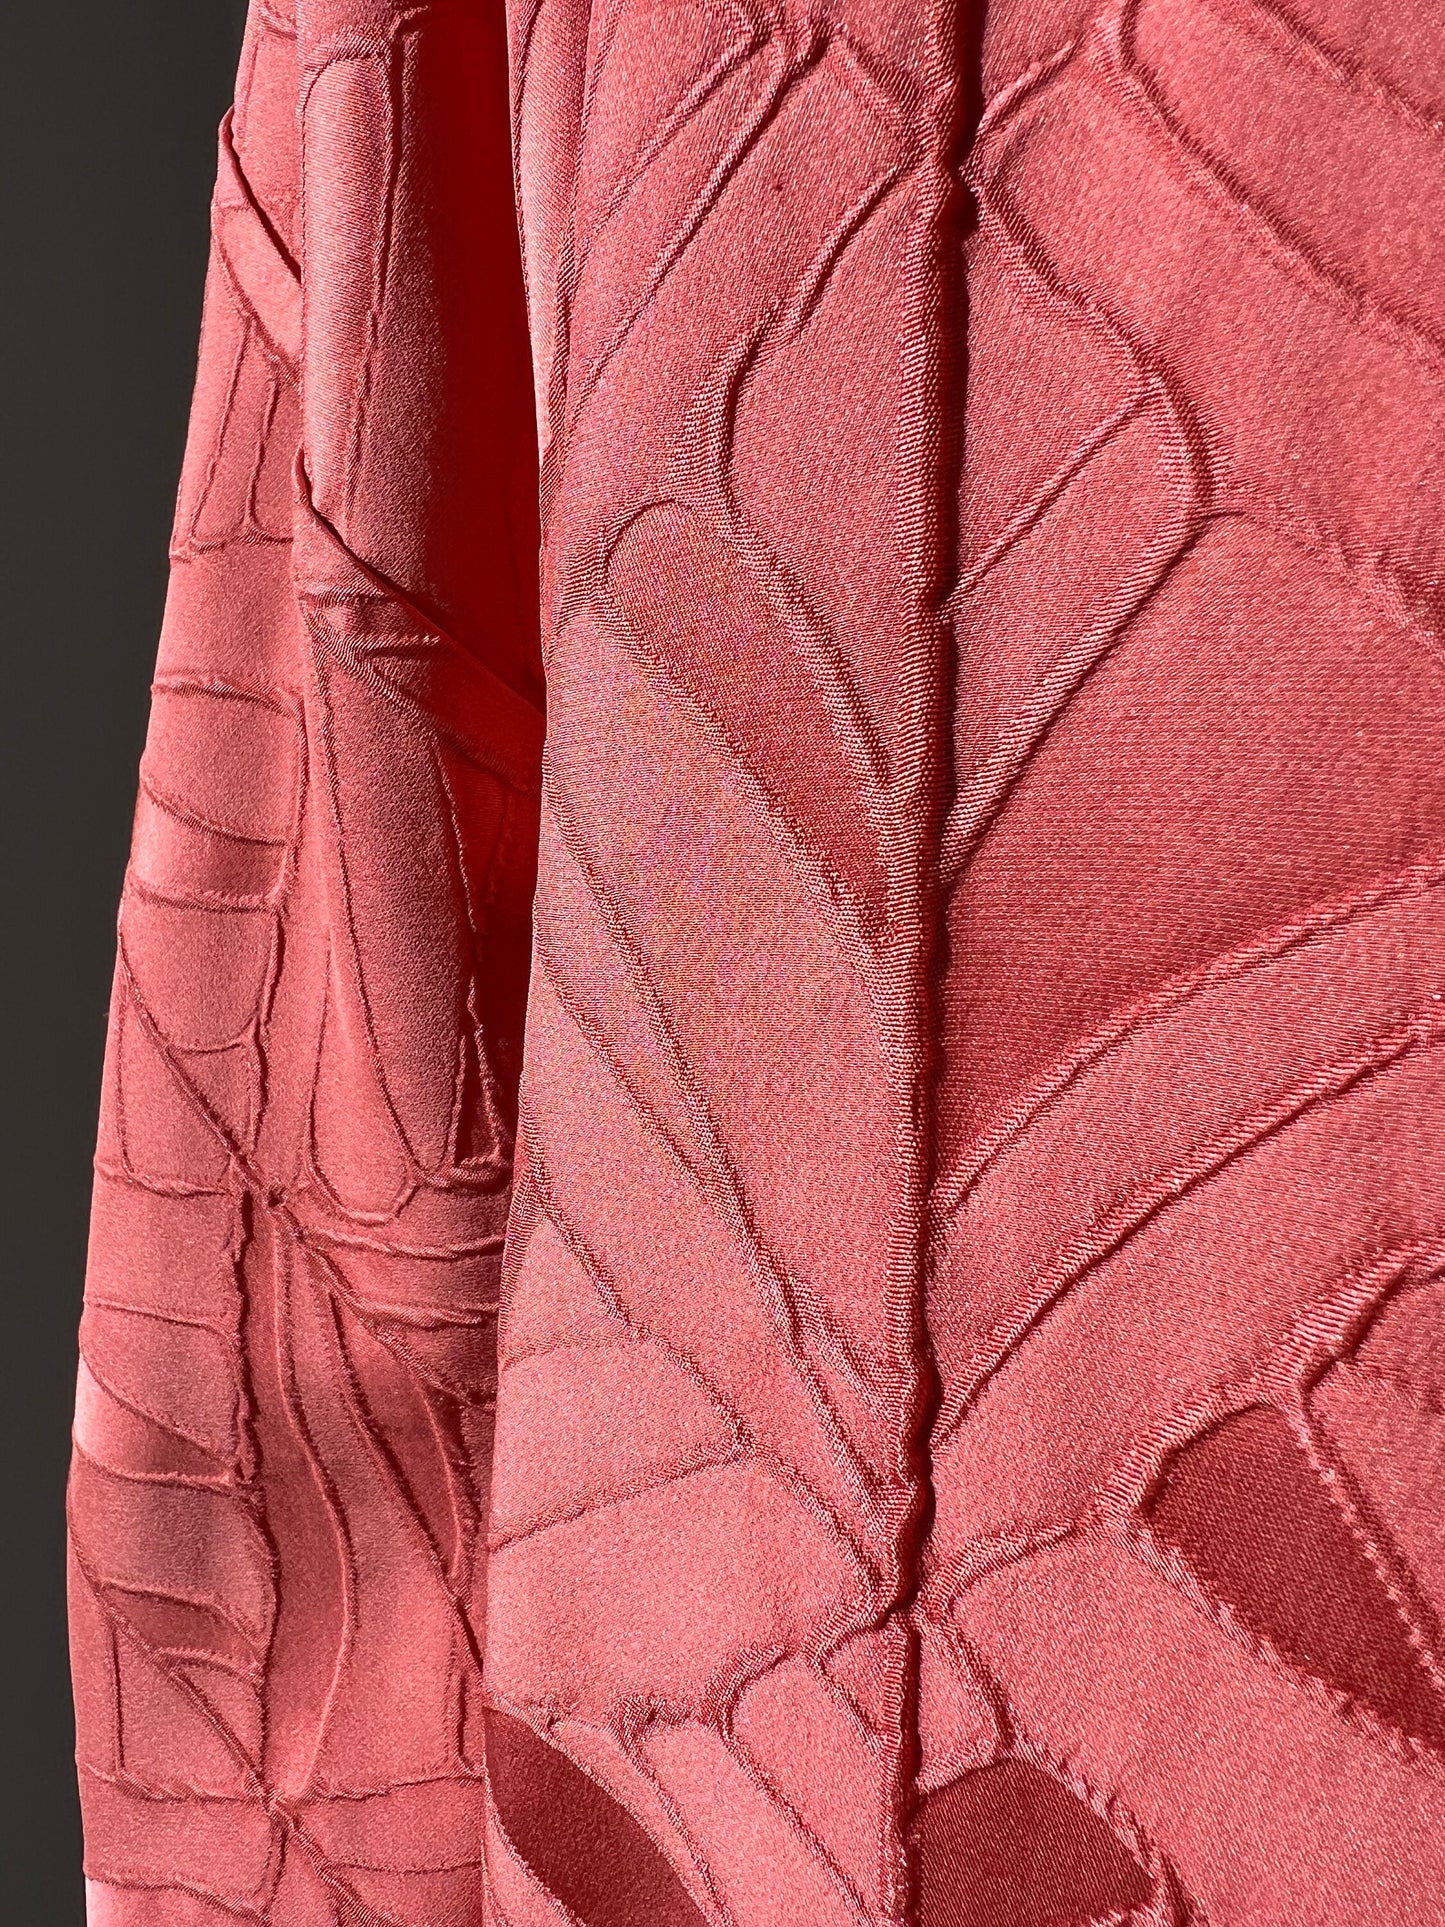 Vintage salmon pink kimono close up